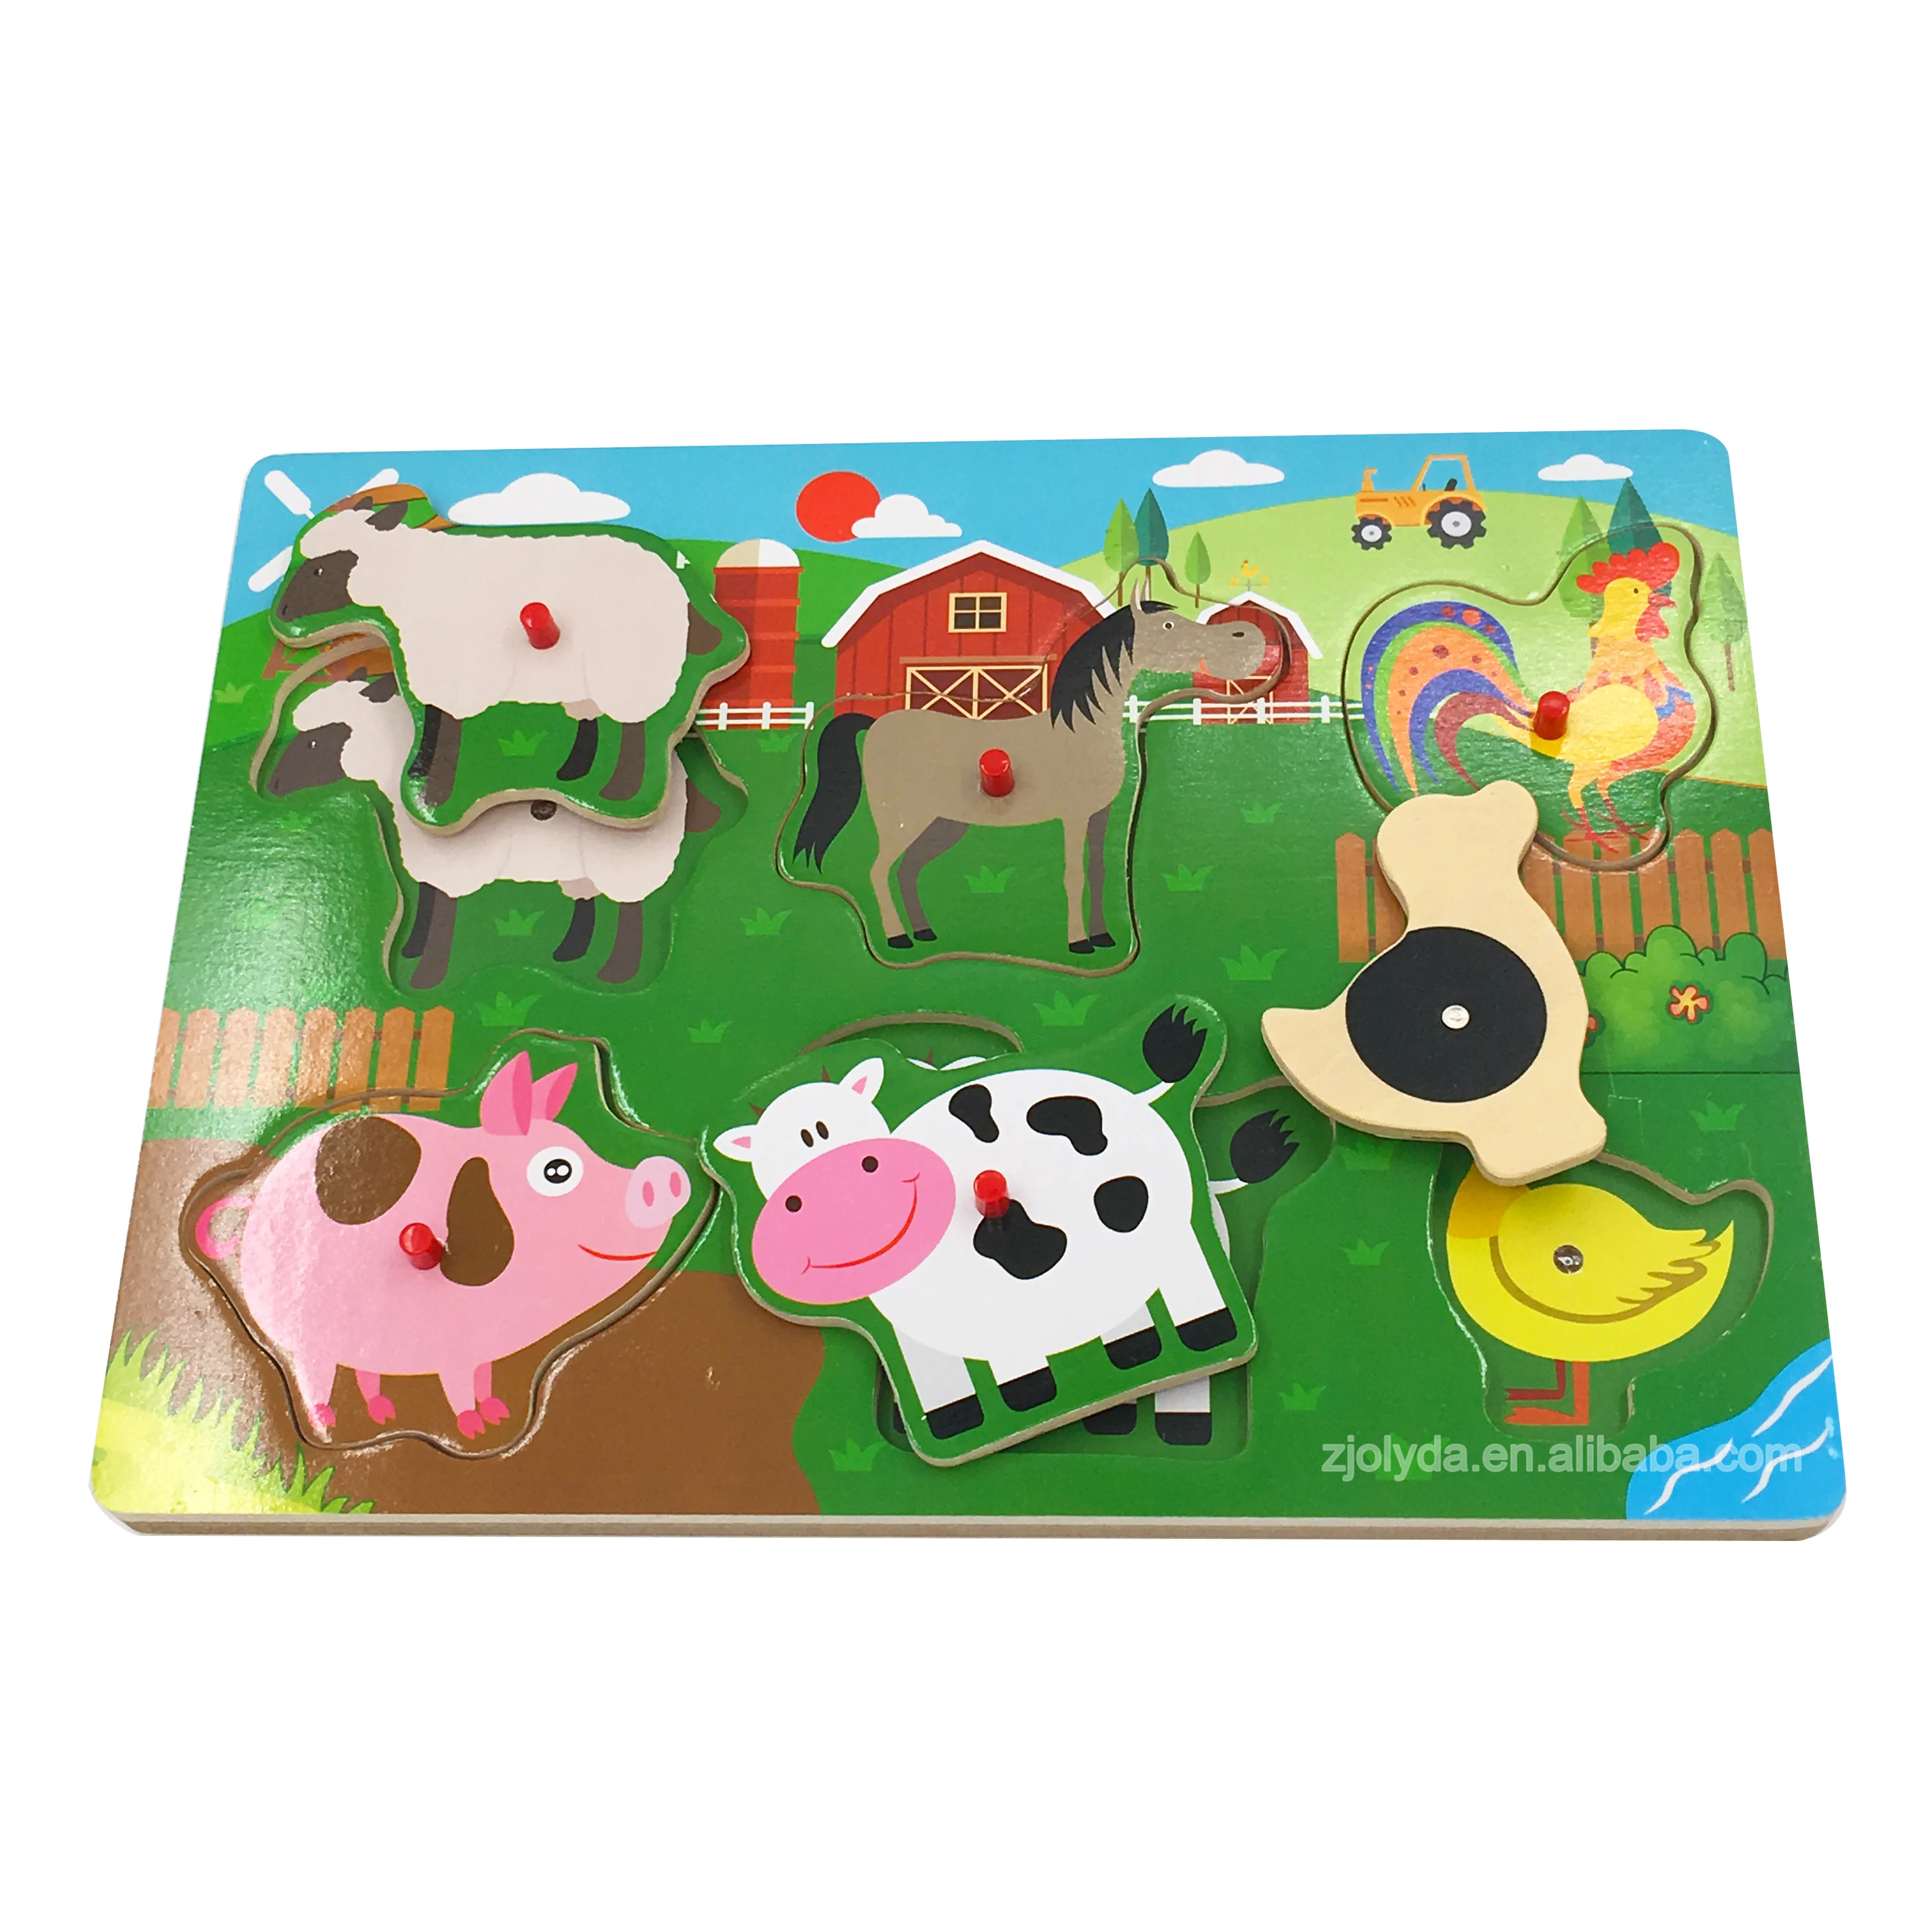 New Design Farm Animal Sound Puzzle - Buy Sound Puzzle,Farm Animal ...